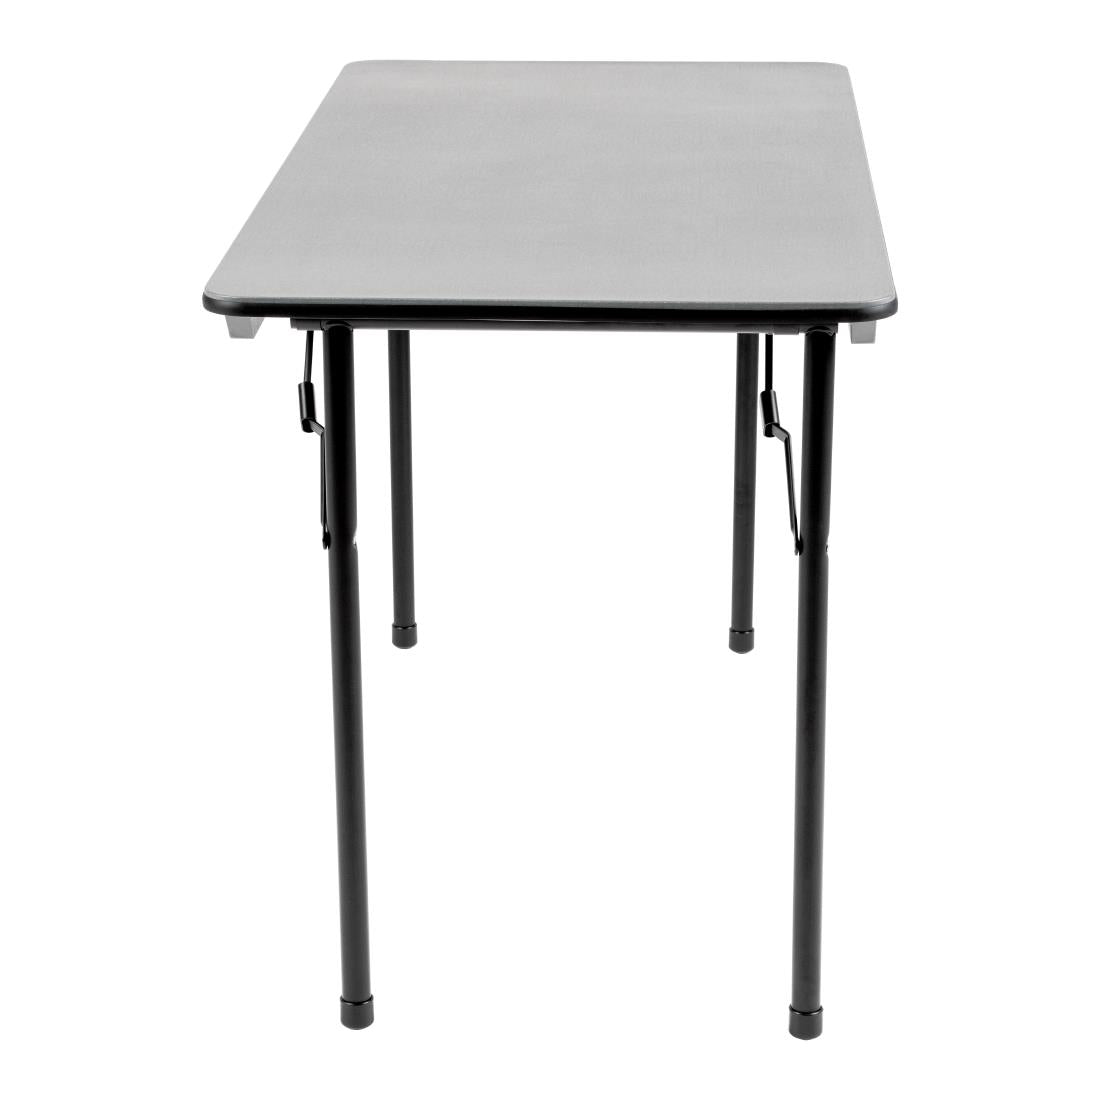 GC594 Bolero ABS Rectangular Folding Table Grey (Single) JD Catering Equipment Solutions Ltd